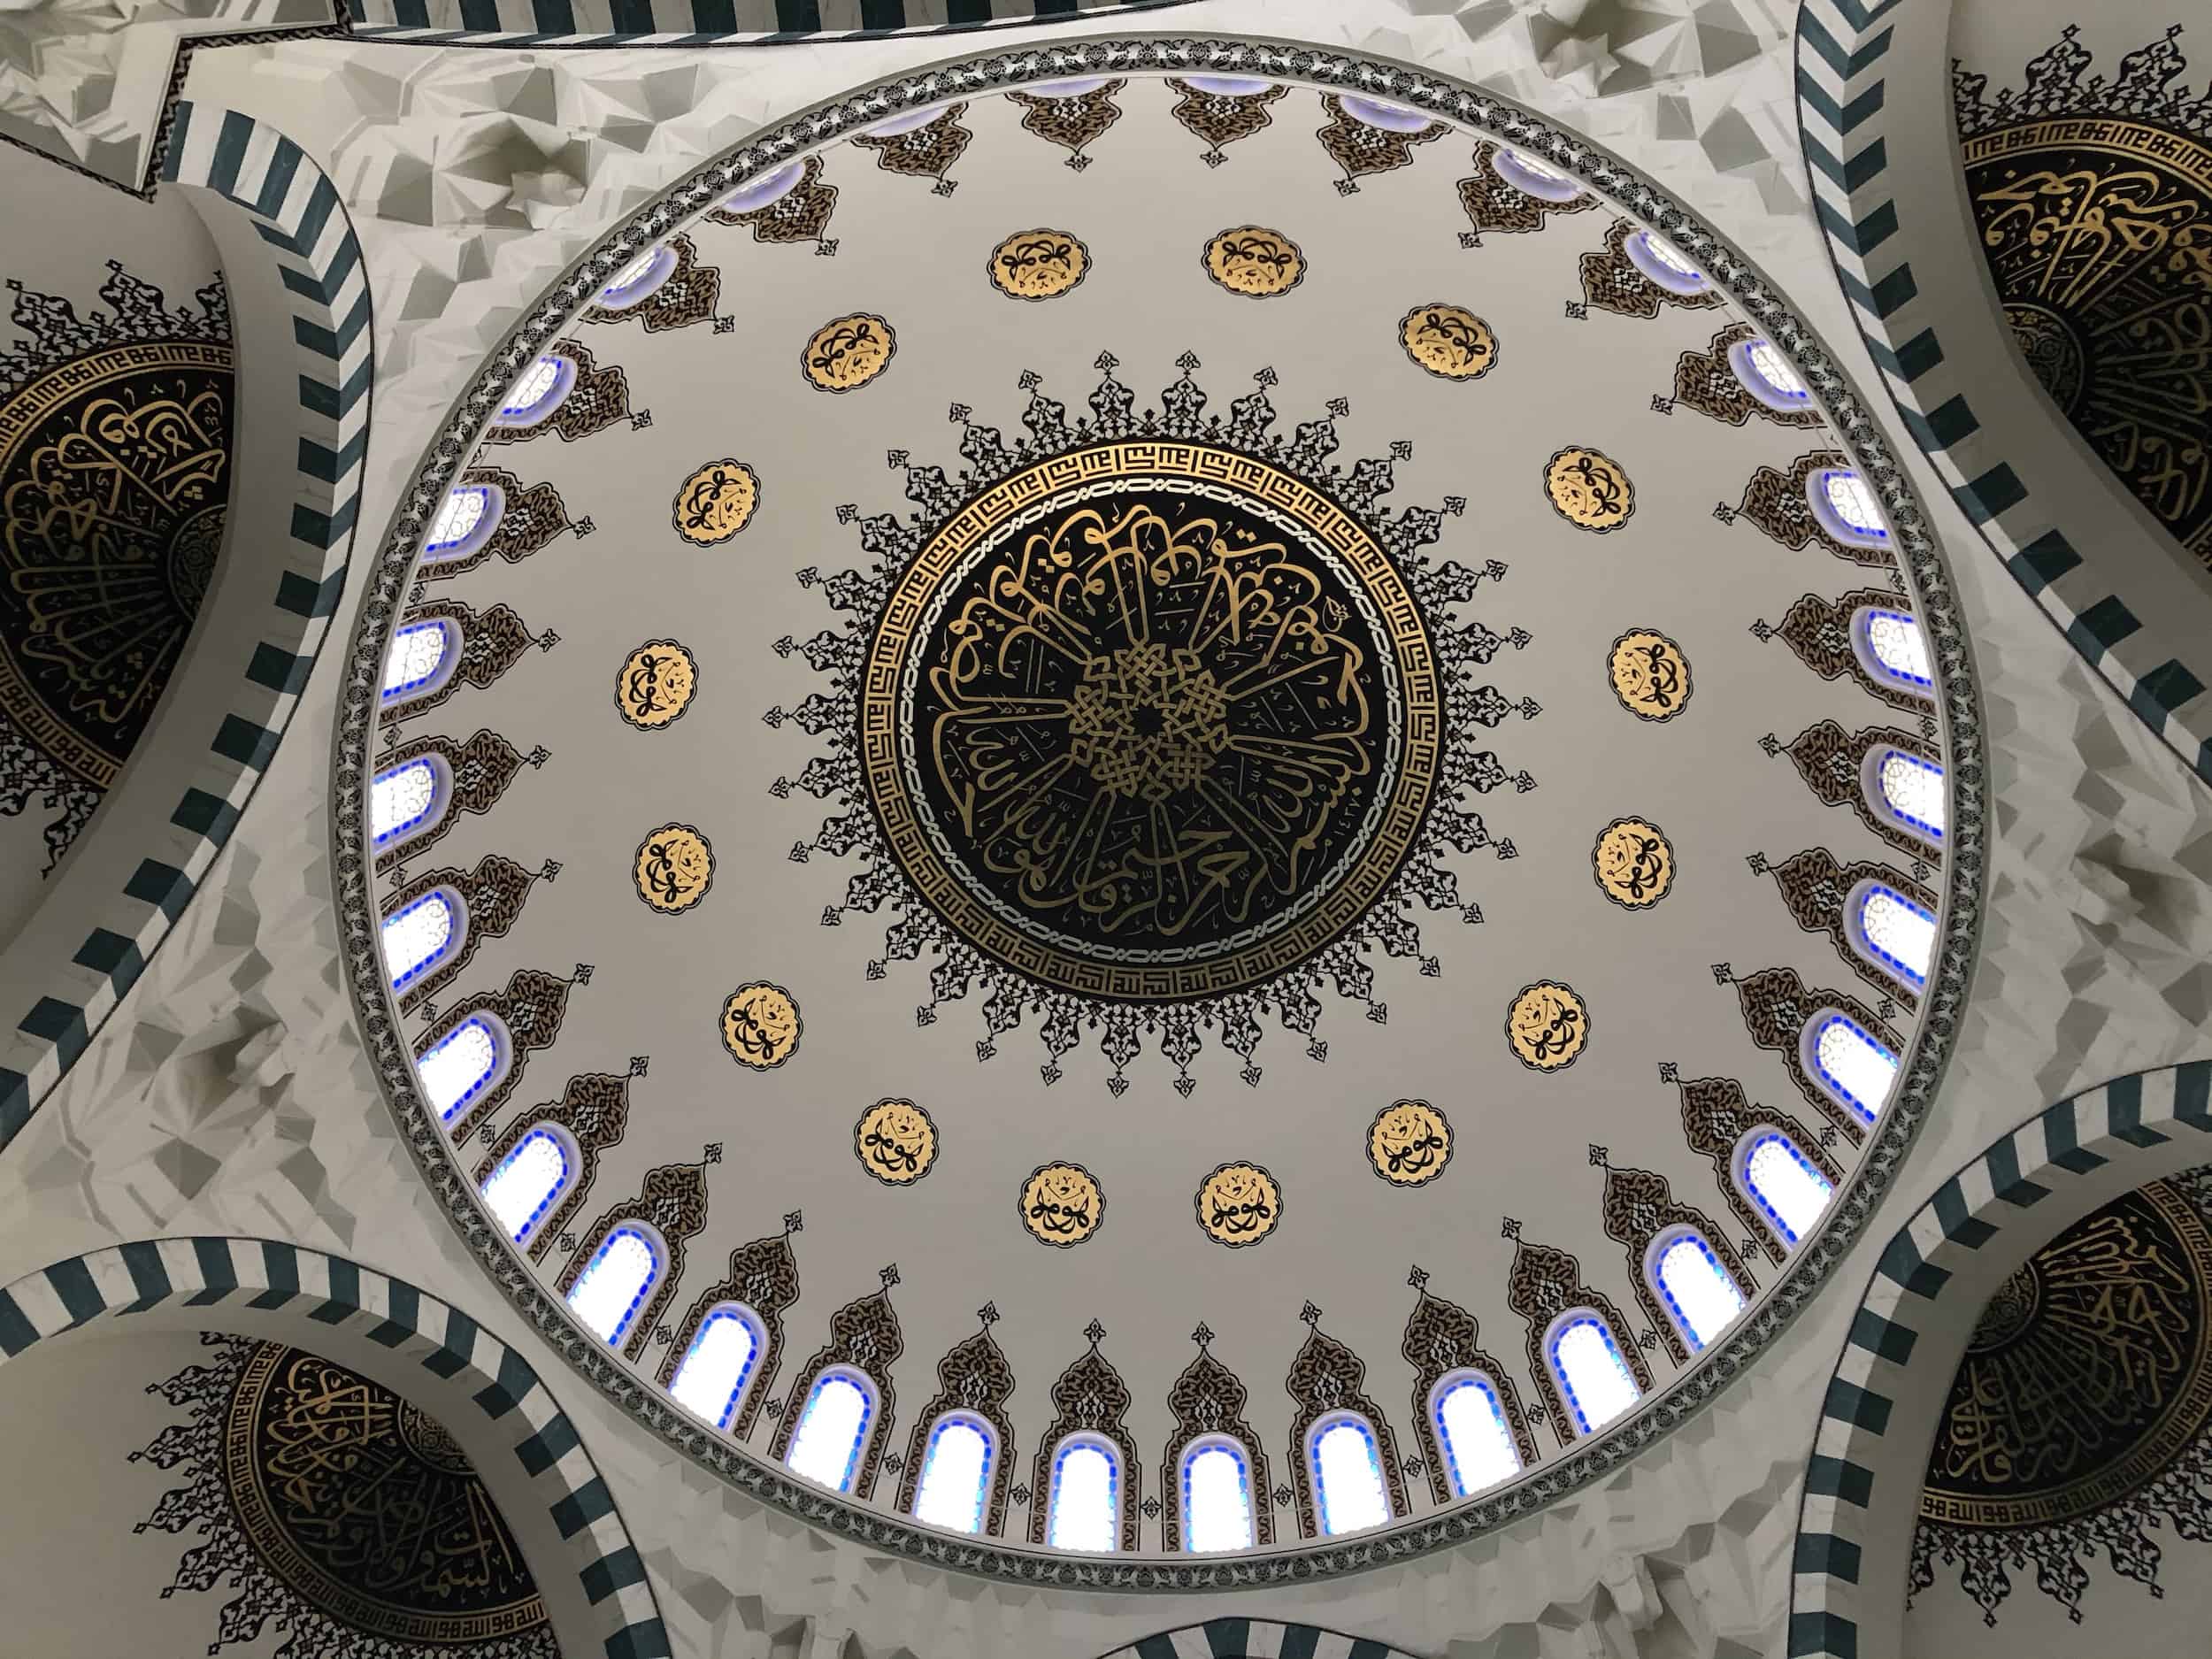 Dome of the Melike Hatun Mosque in Ulus, Ankara, Turkey